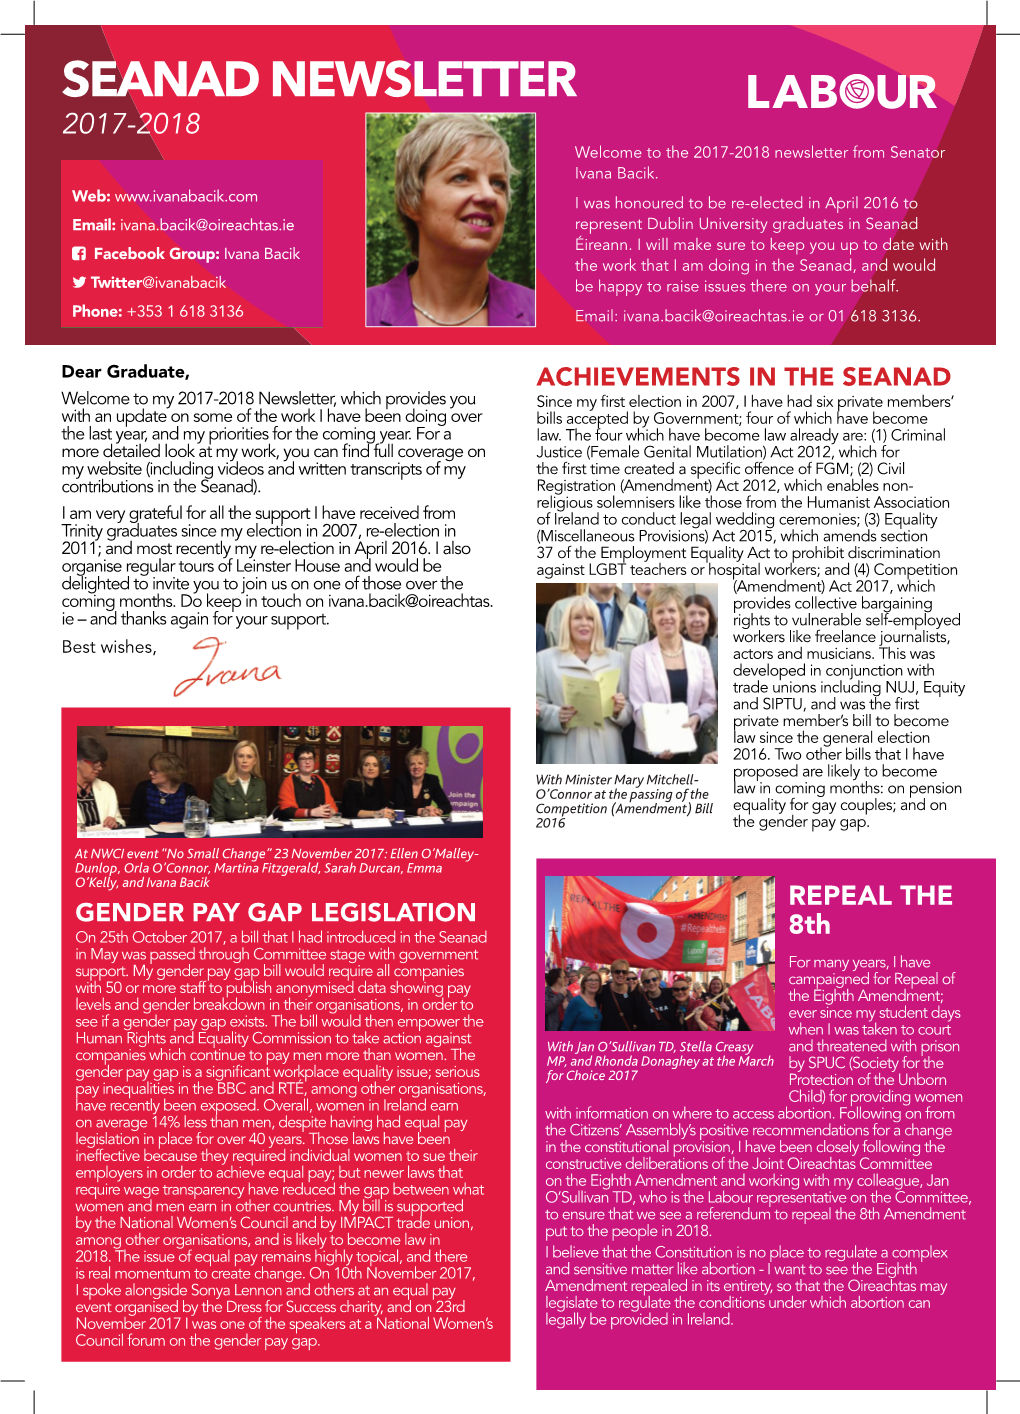 Seanad Newsletter 2017-2018 Welcome to the 2017-2018 Newsletter from Senator Ivana Bacik